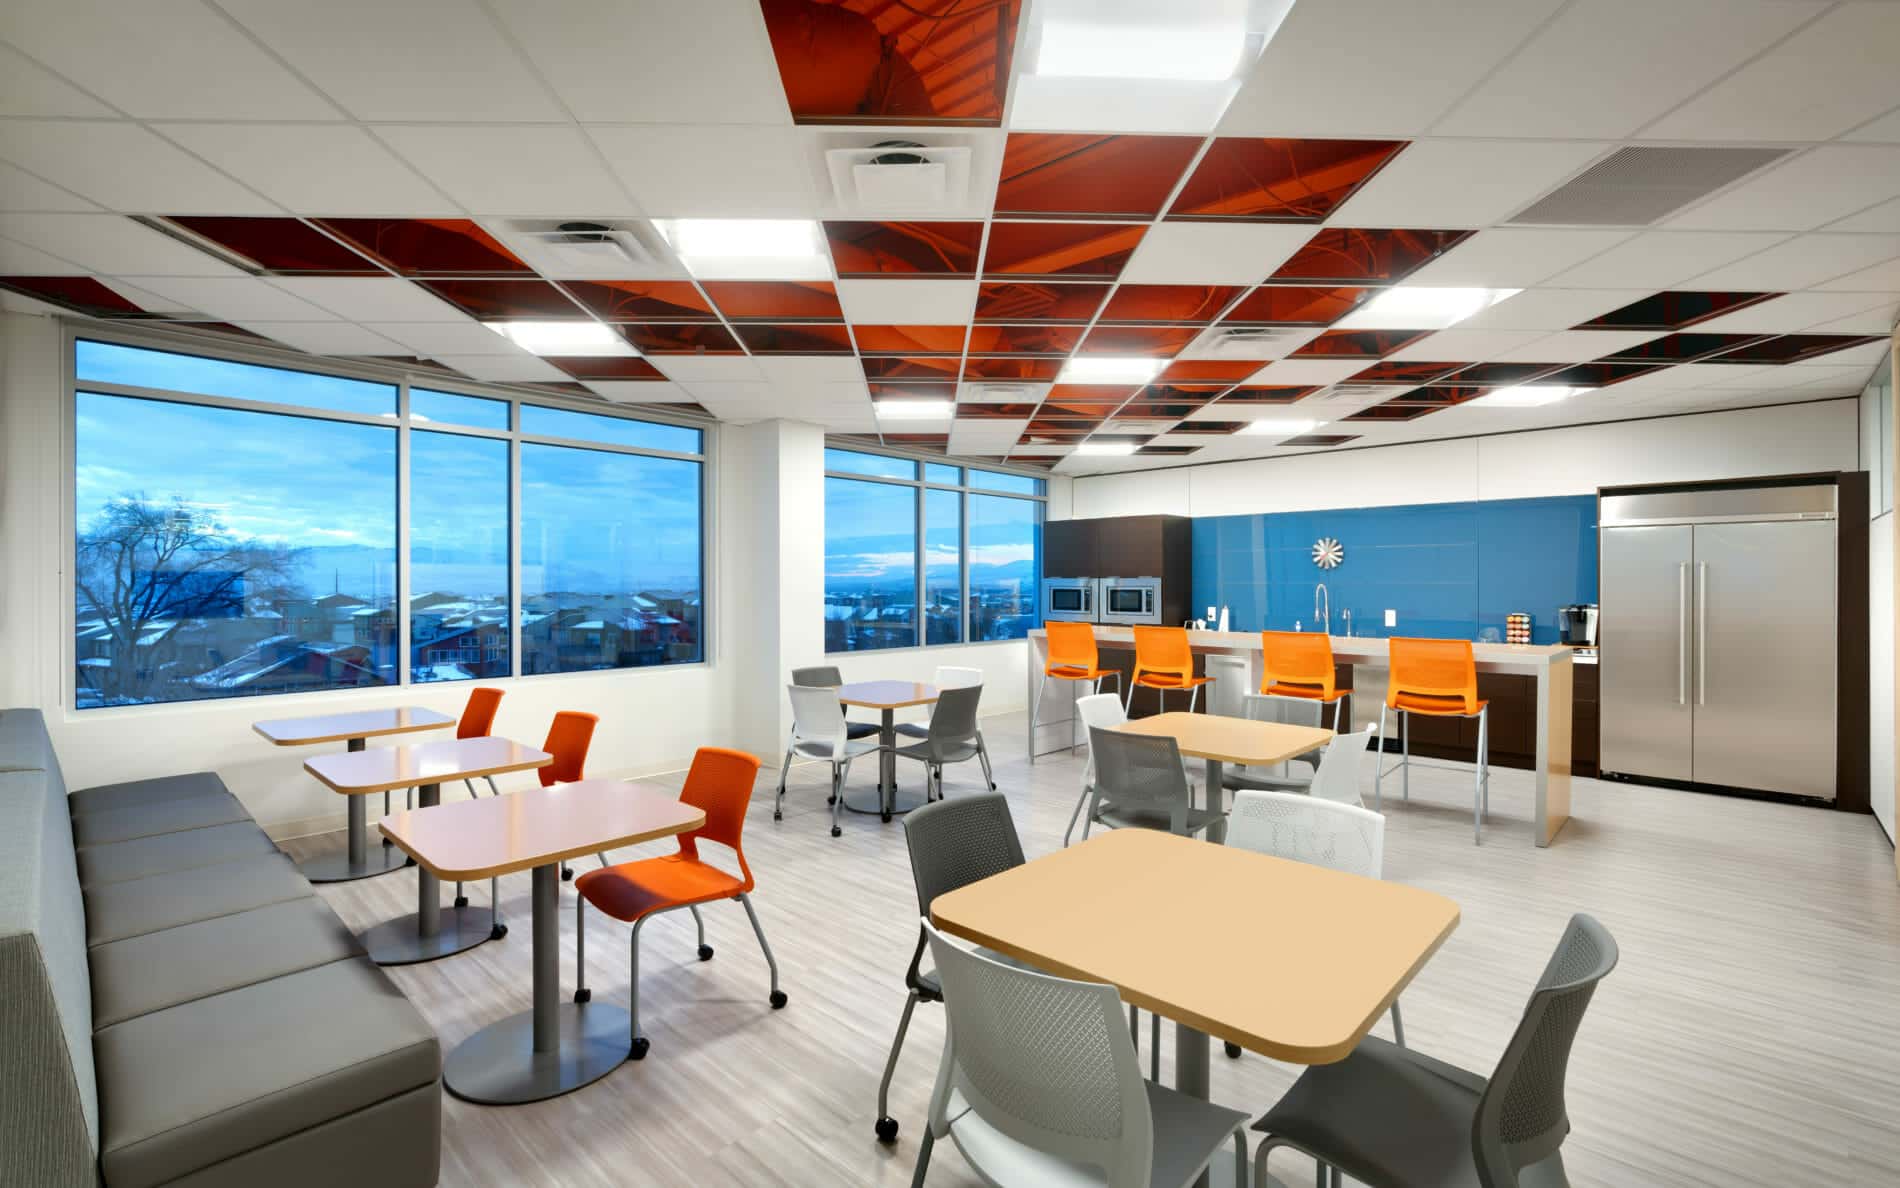 Break room at Larson & Company Office in South Jordan, UT | Utah Interior design project | Think Architecture